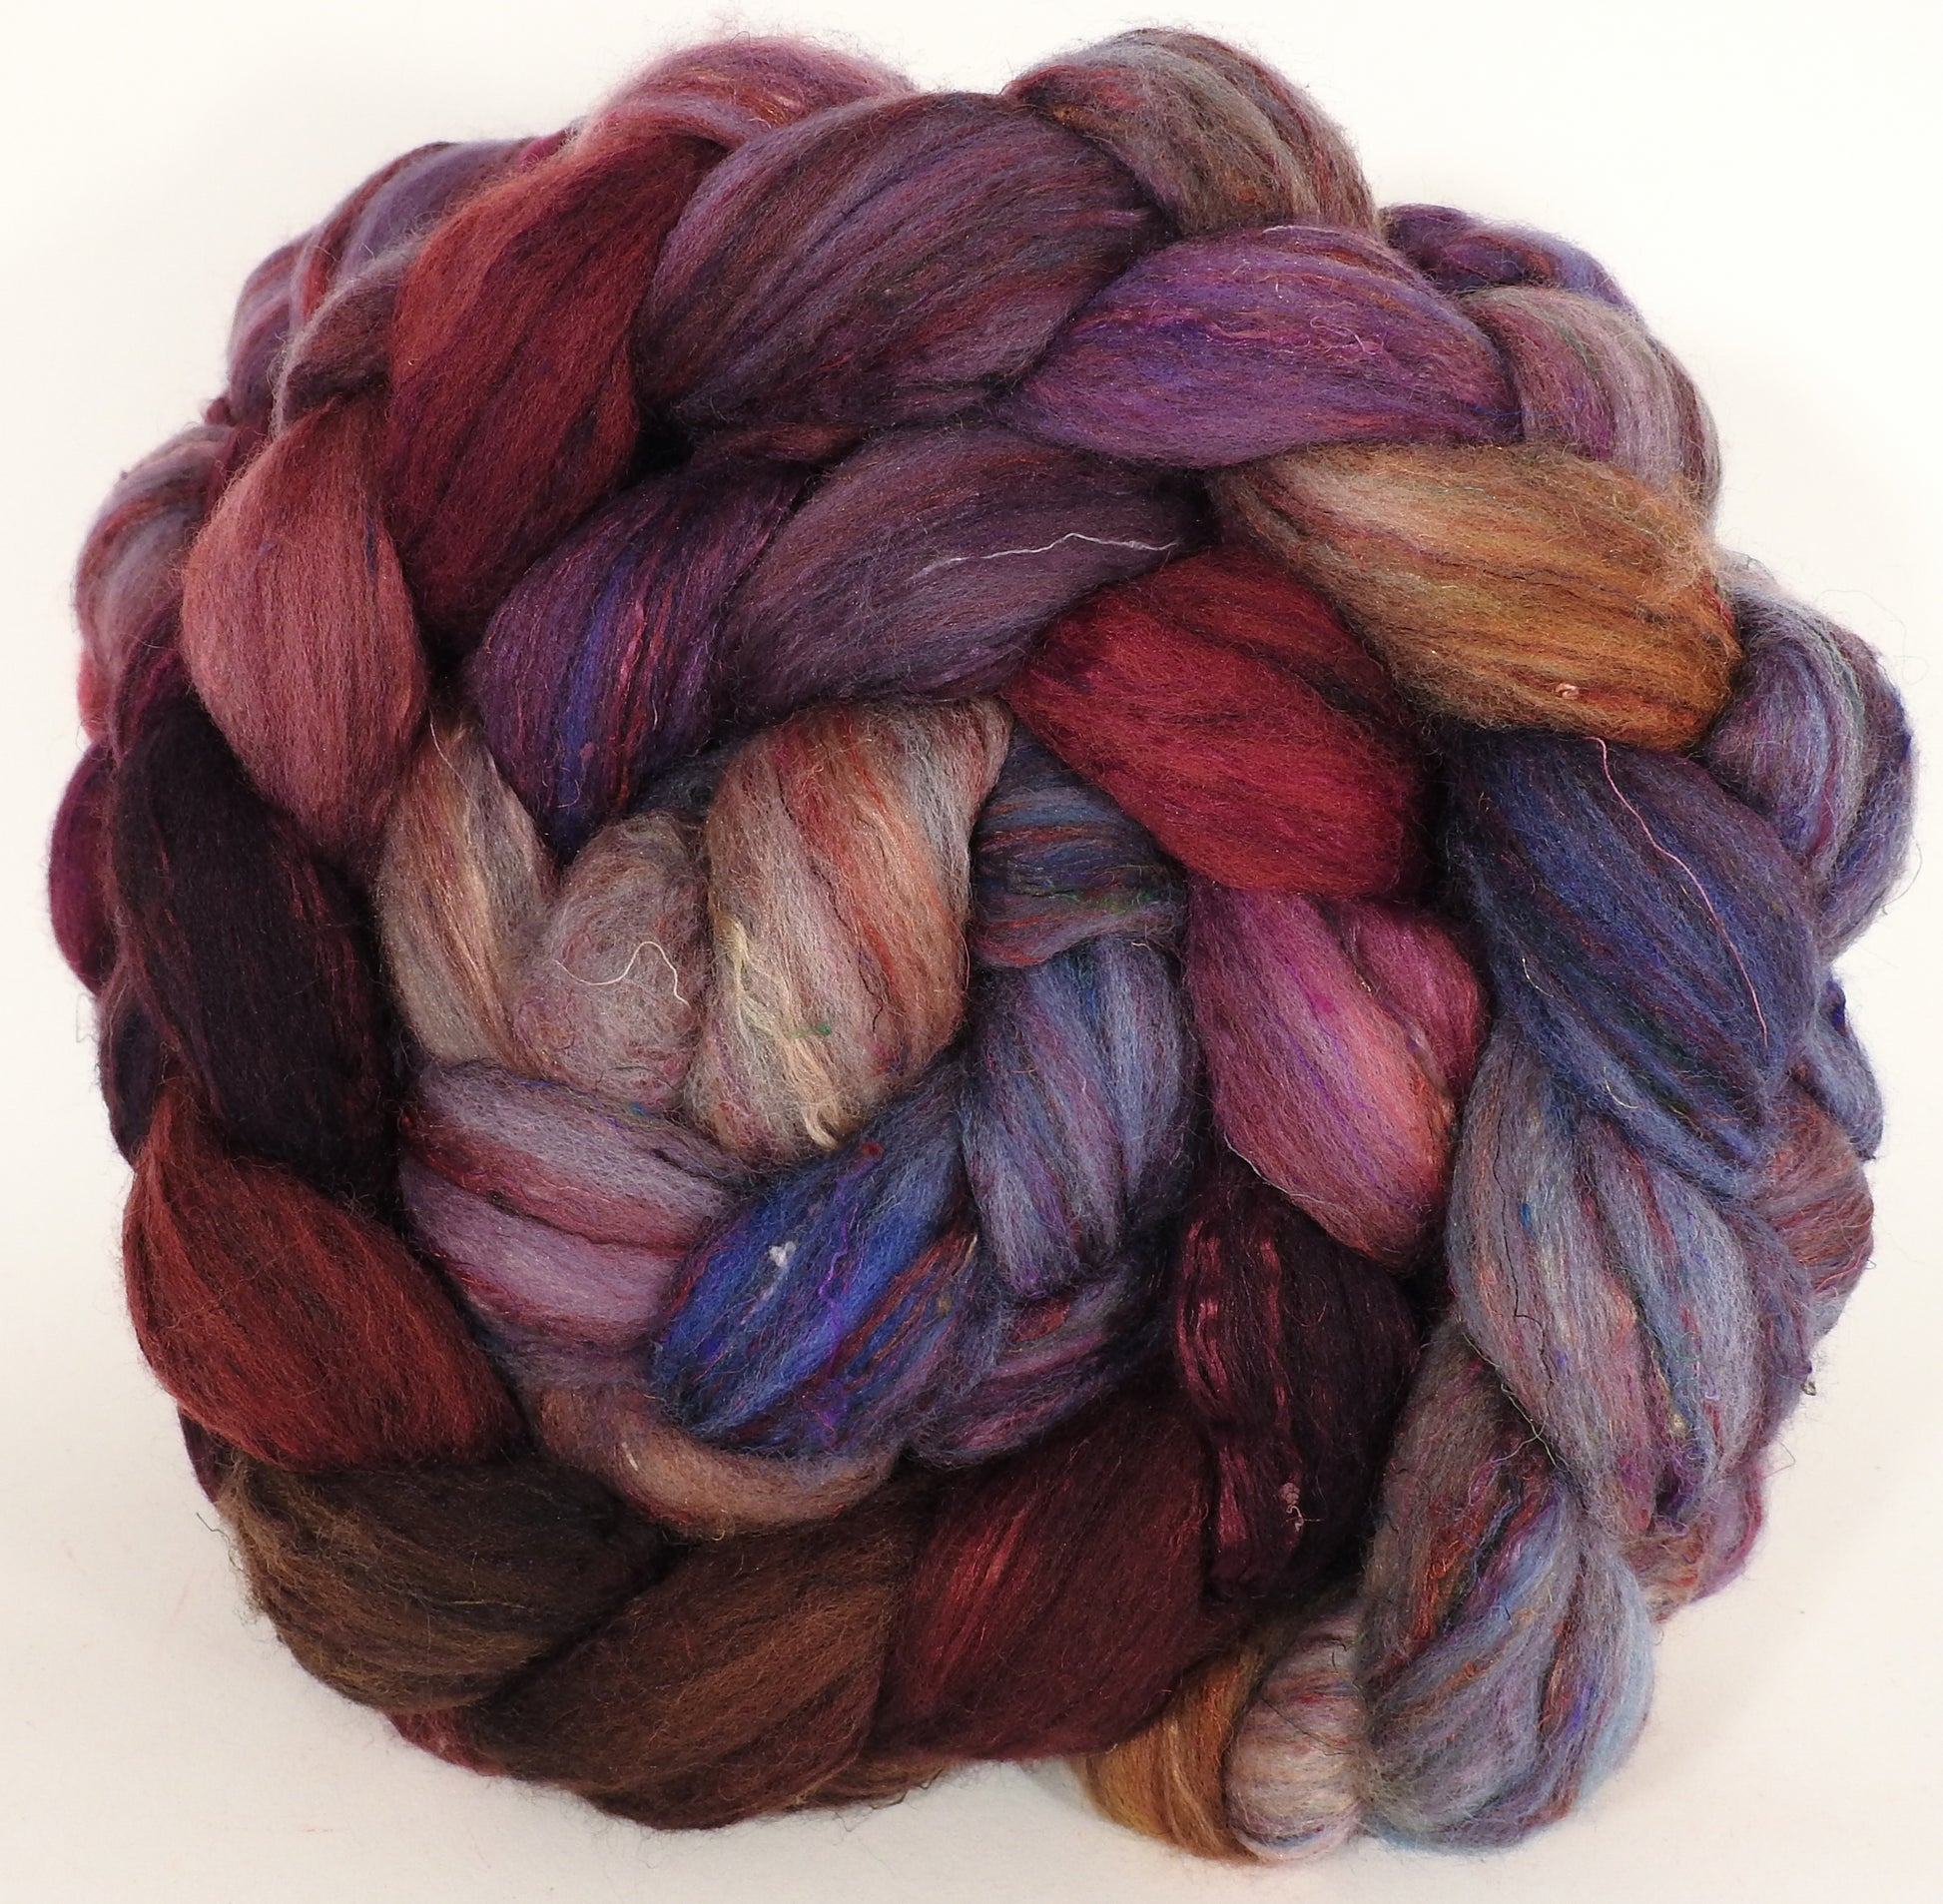 Batt in a Braid #39- Provence - Falkland Merino/ Mulberry Silk / Sari Silk (50/25/25) - Inglenook Fibers